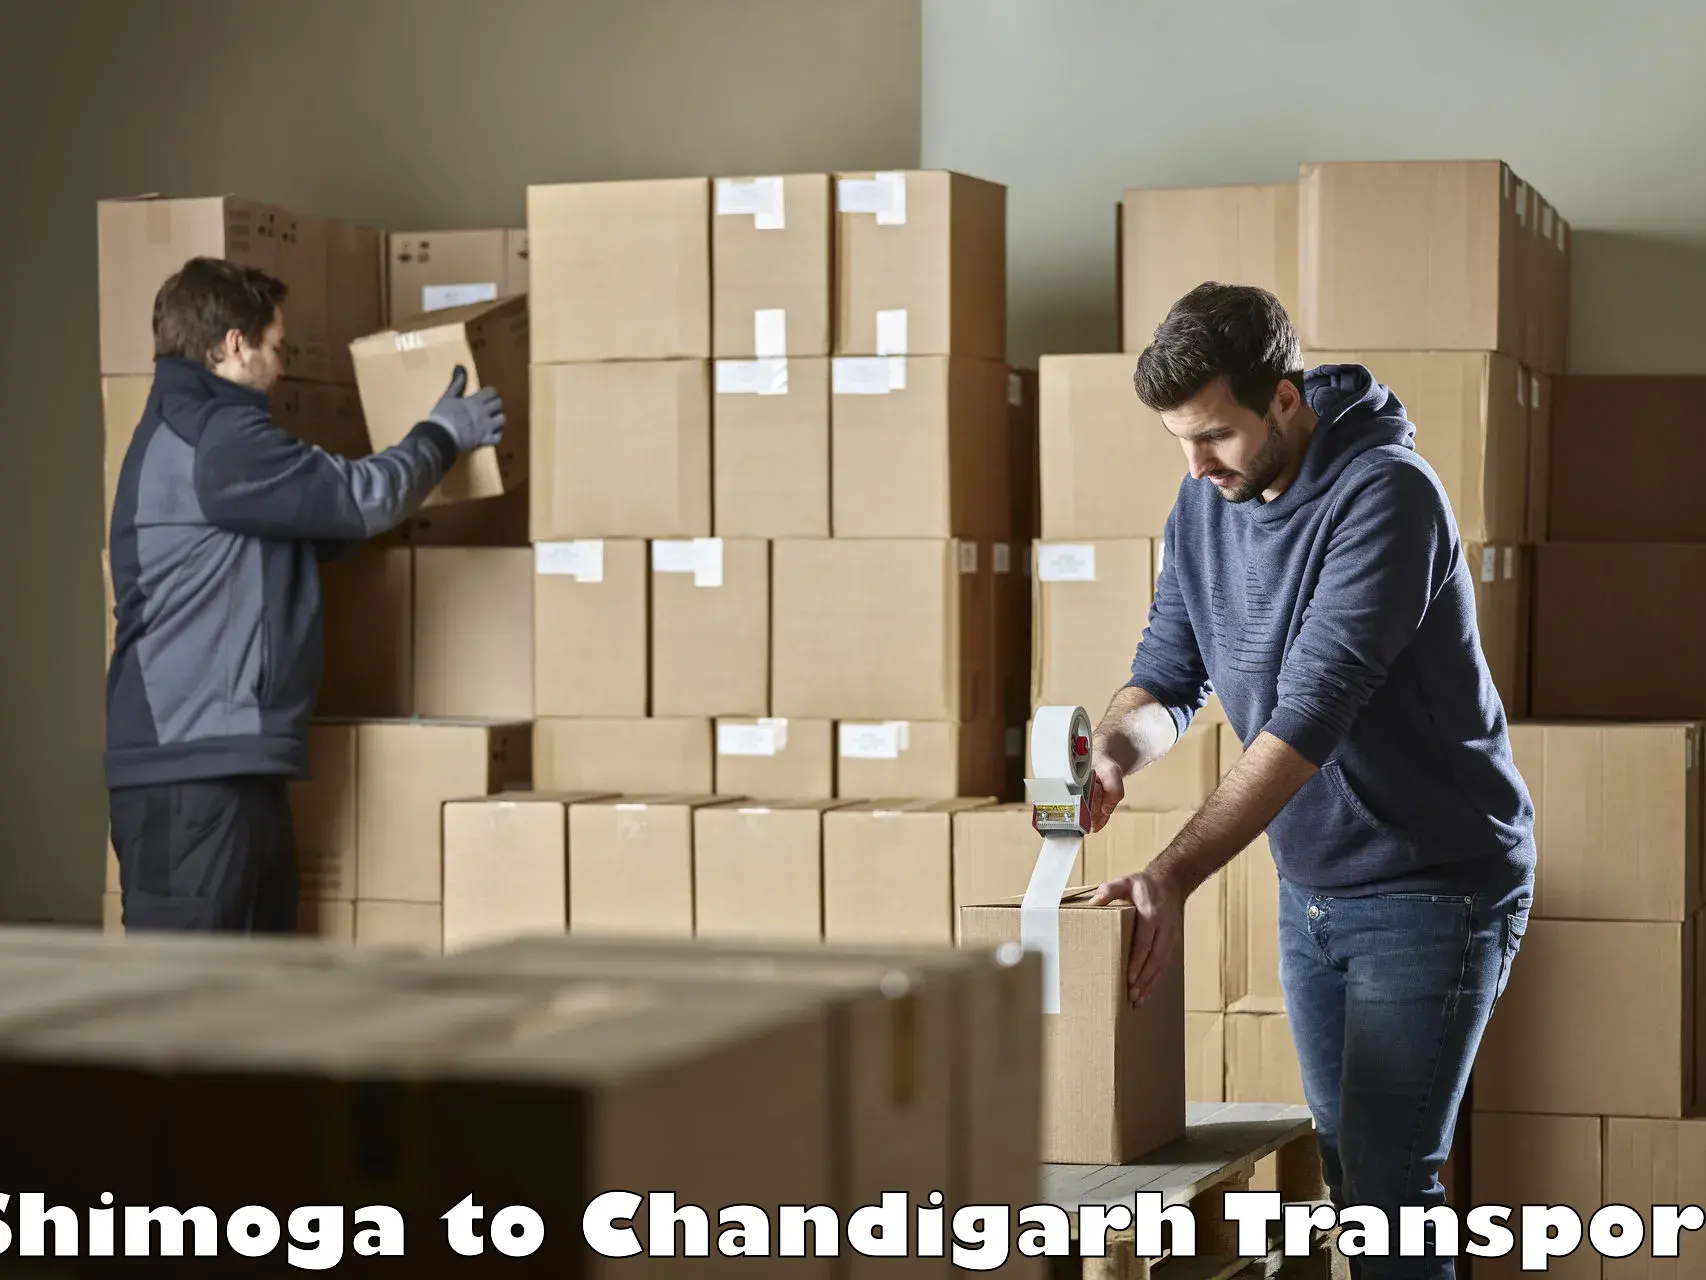 Daily transport service Shimoga to Chandigarh